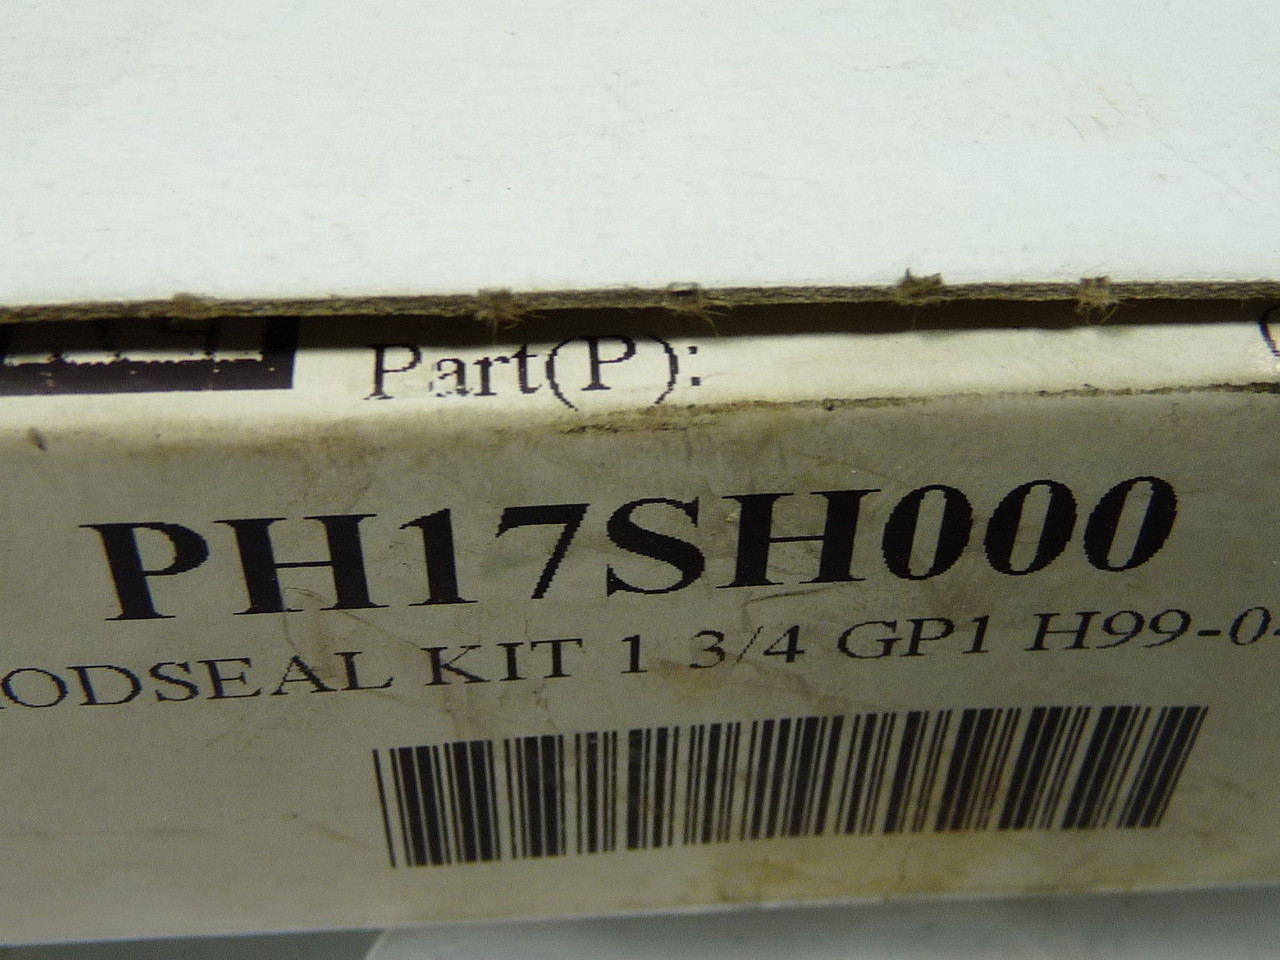 Generic PH17SH000 Rod Seal Kit Nitrile 1-3/4" ! NEW !